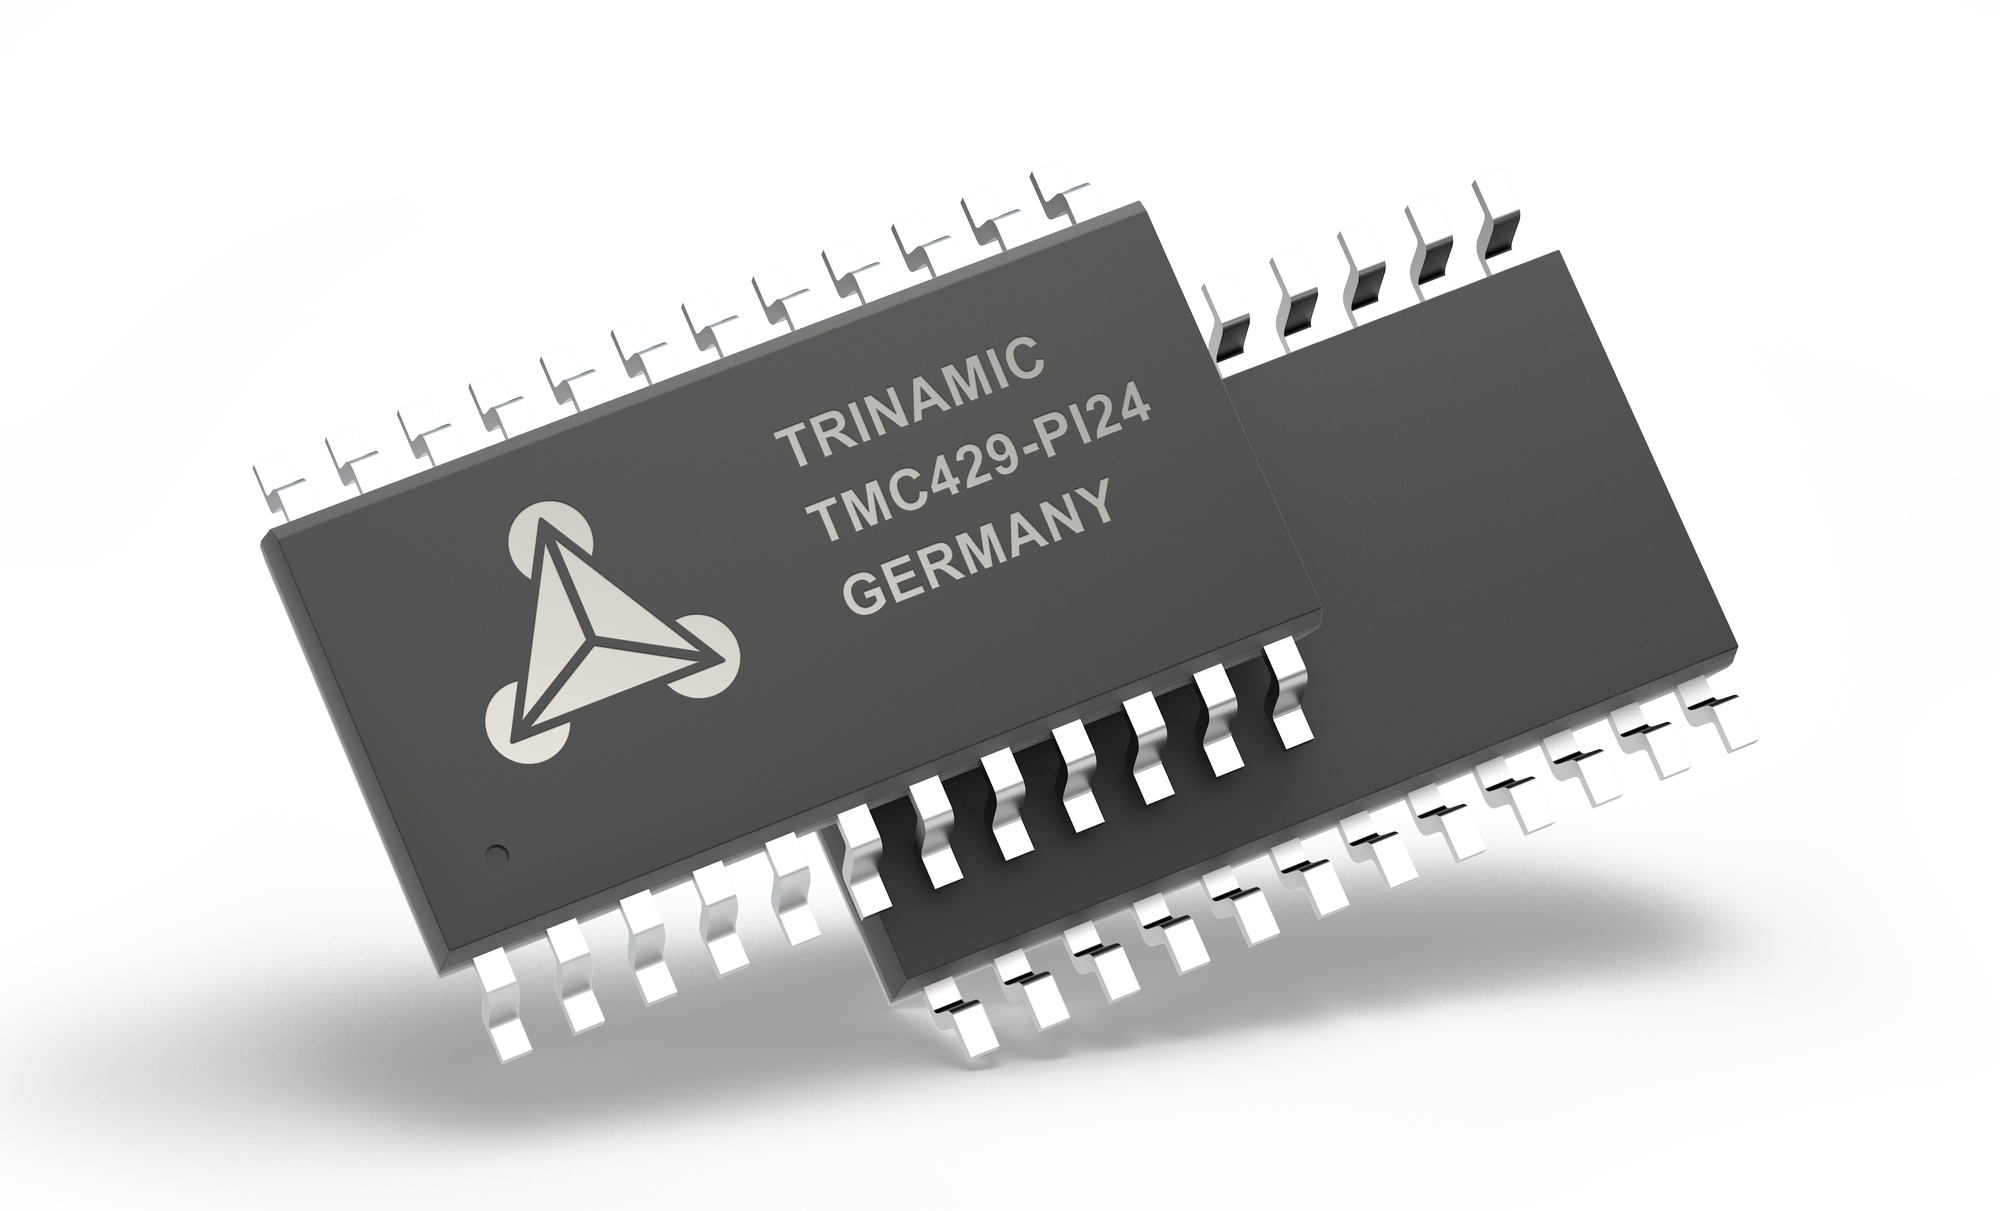 TMC429-PI24(Motion and Interface Controller ICs)